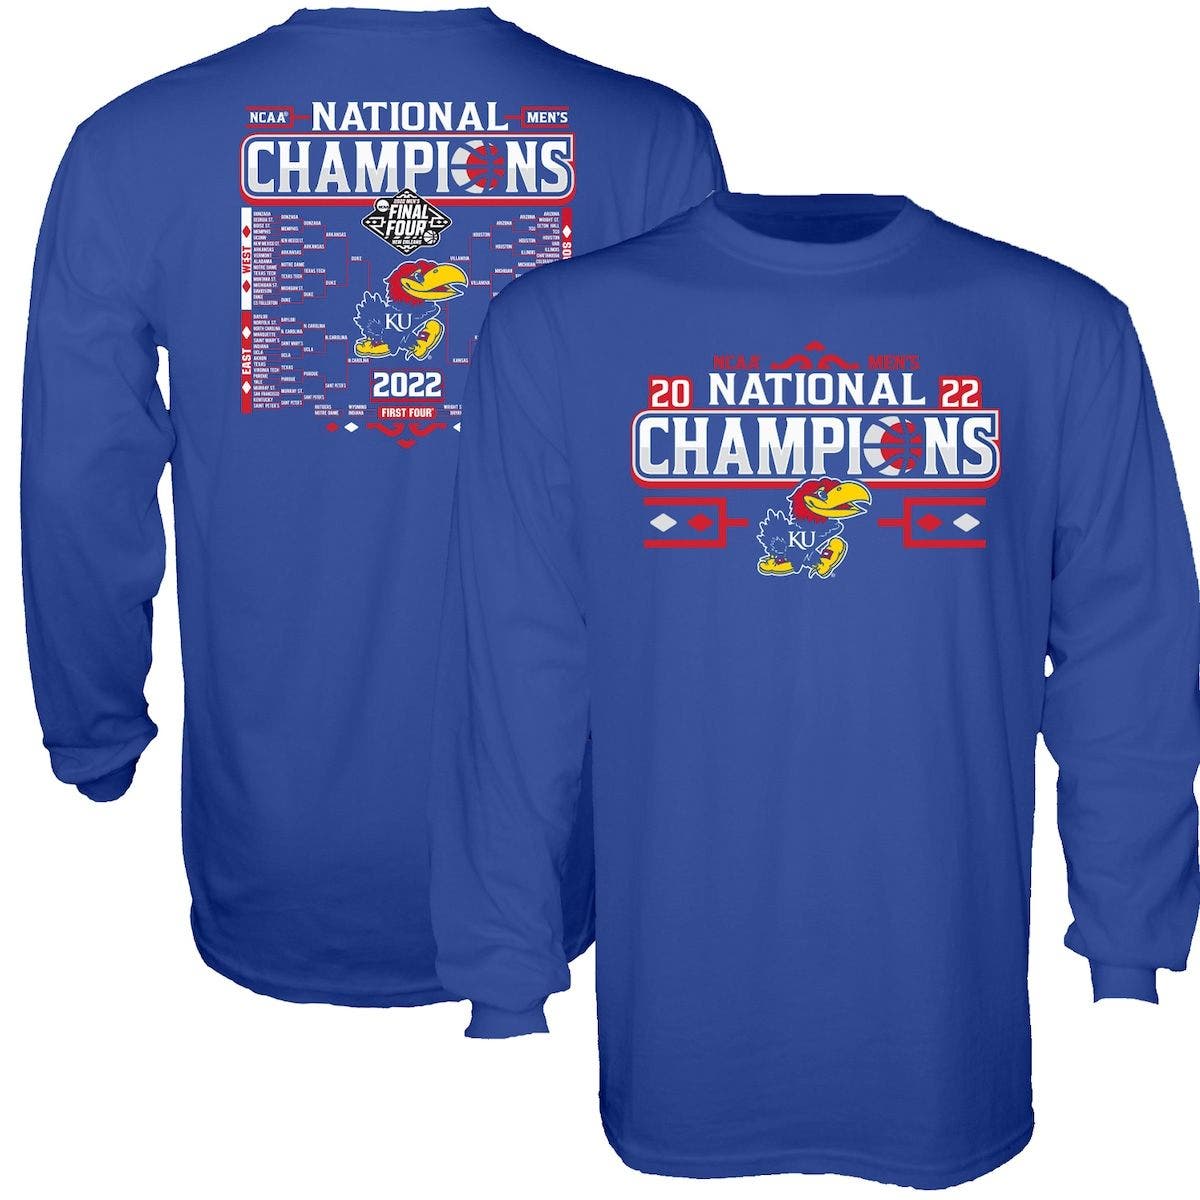 Blue 84 Women's NCAA Kansas Jayhawks National Basketball Champions T-Shirt 2022 Triblend Prize 